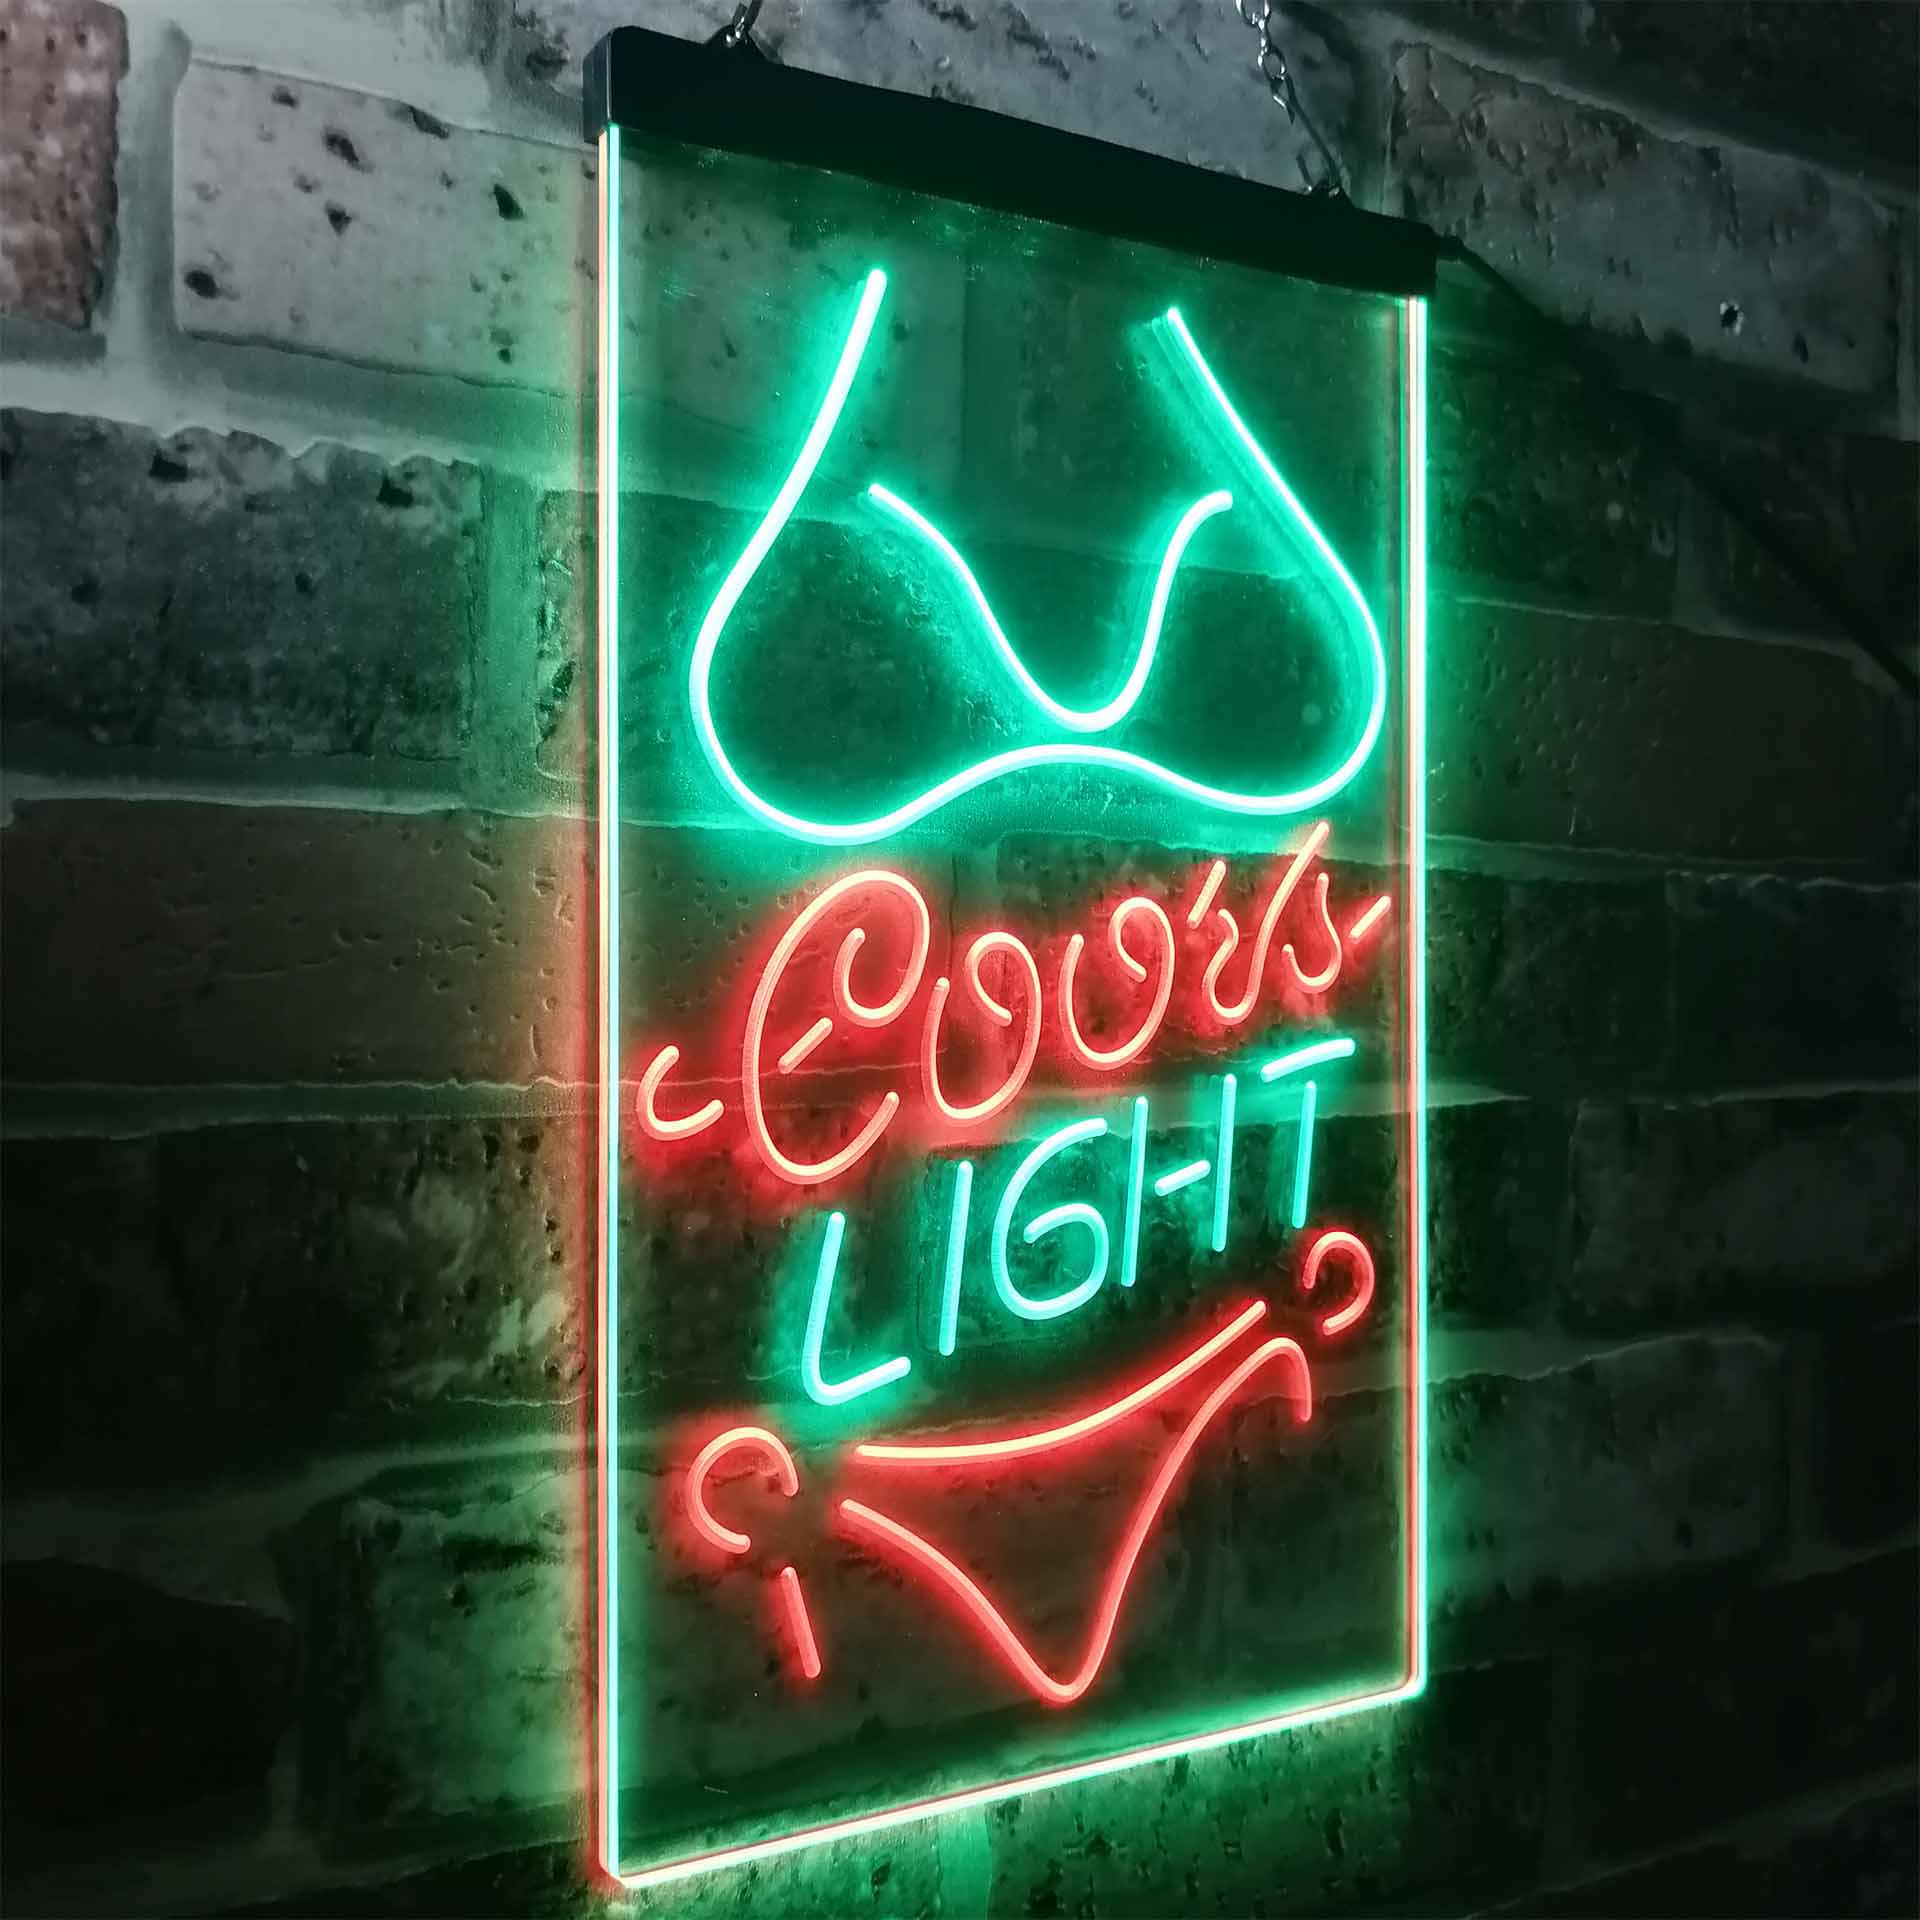 Coors Light Bikini Girl Man Cave LED Neon Sign